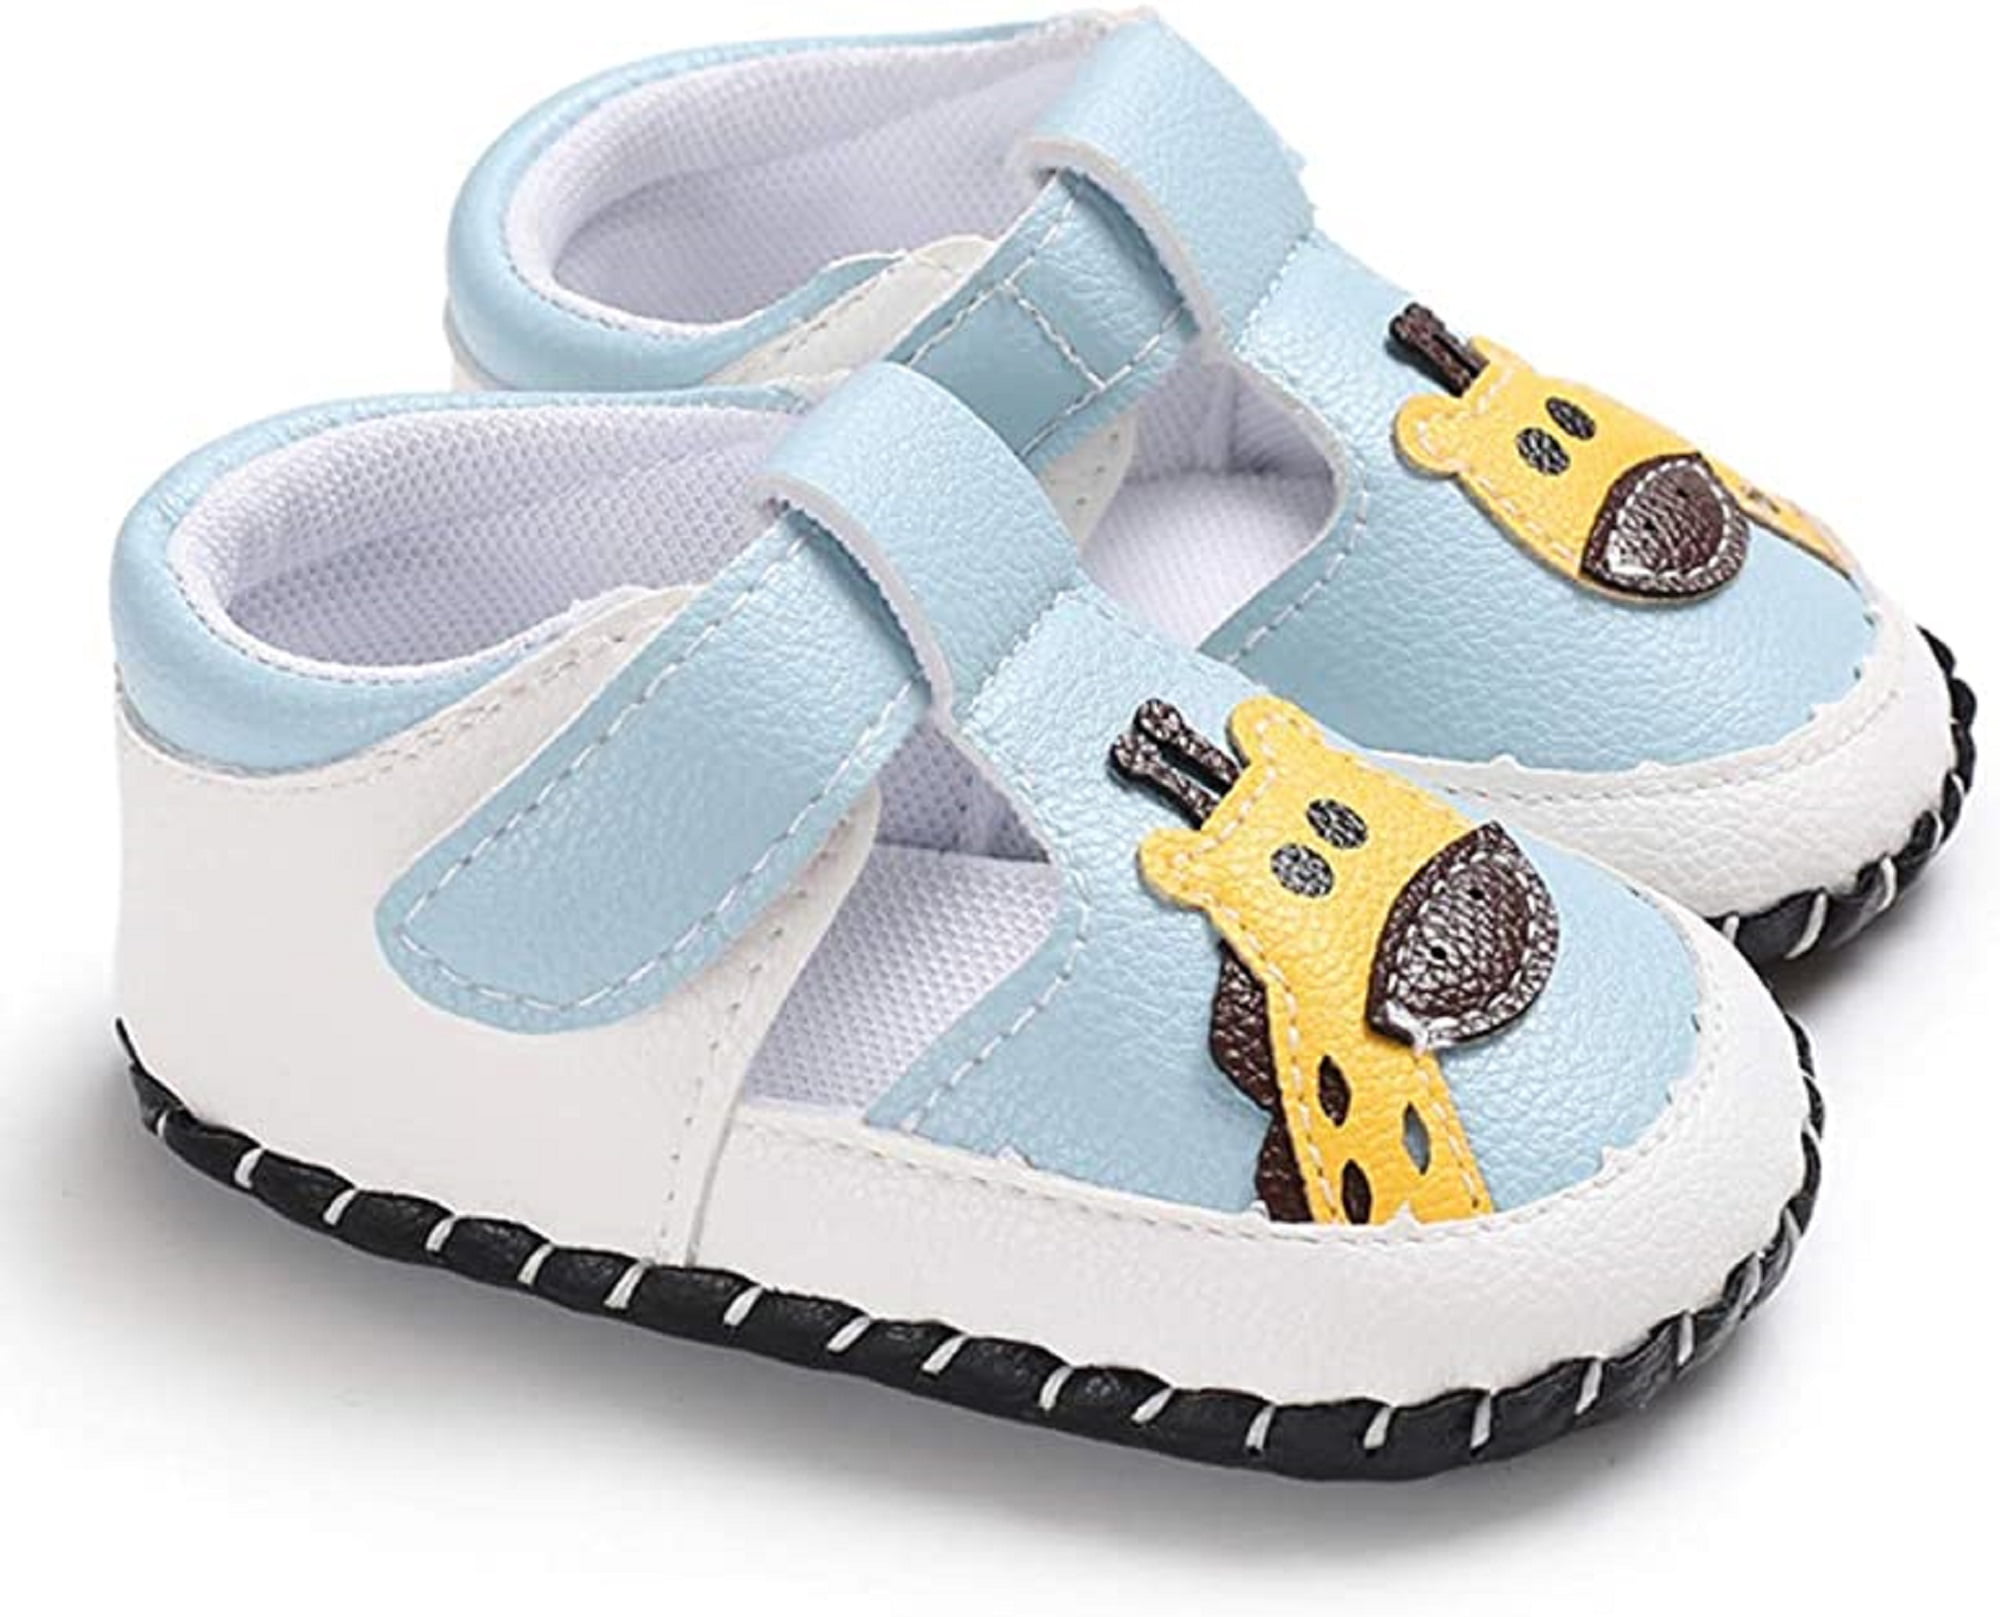 BENHERO Infant Baby Boys Girls Cartoon Shoes Soft Sole Non-Slip Newborn Toddler First Walker Crib Shoes 